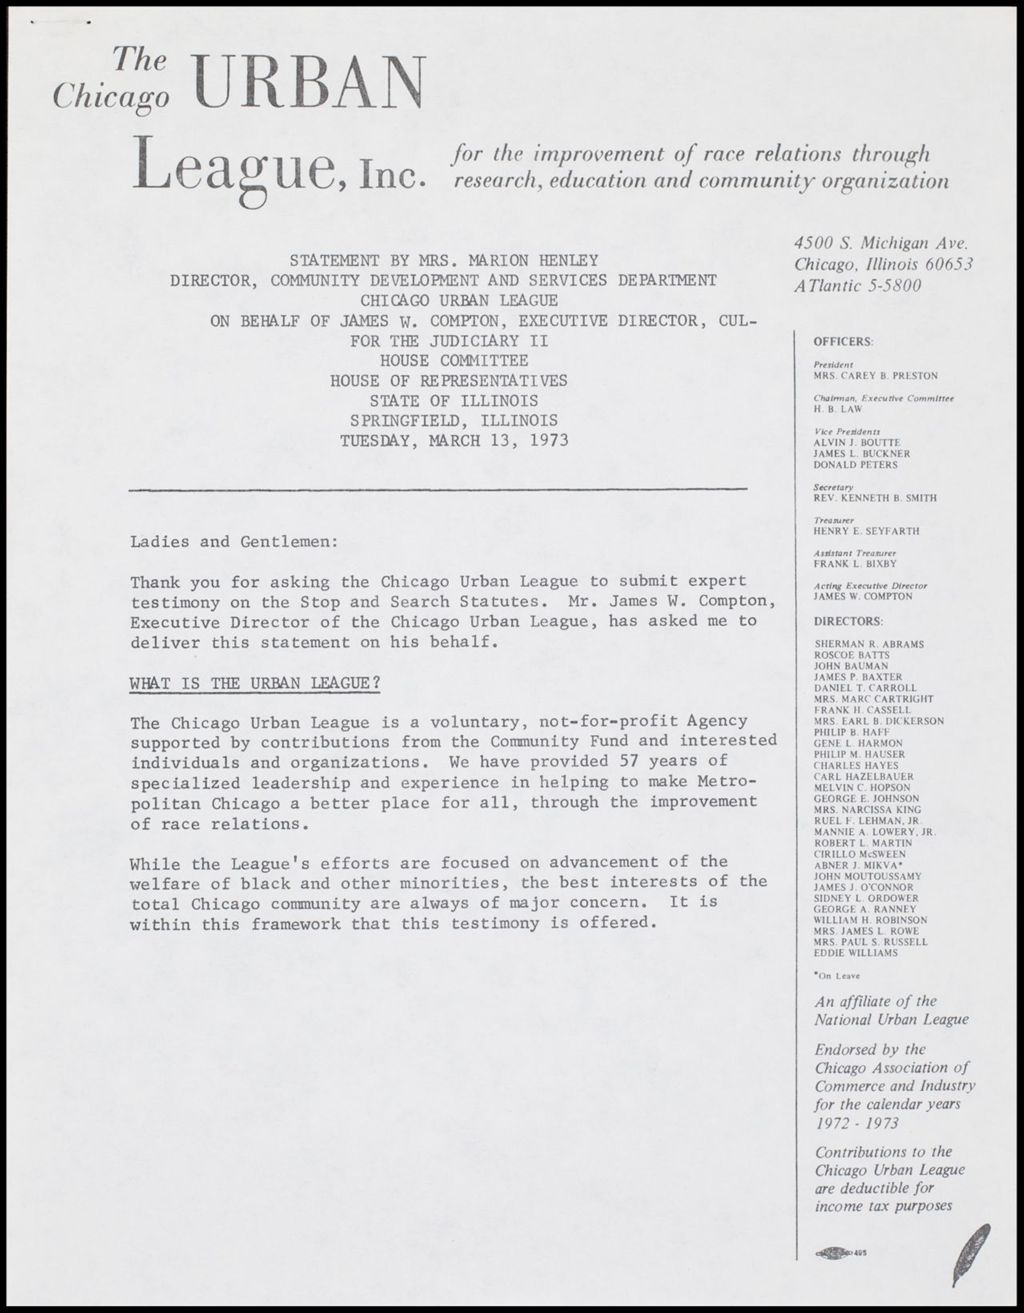 Miniature of Legislative Support, 1973 (Folder II-2120)